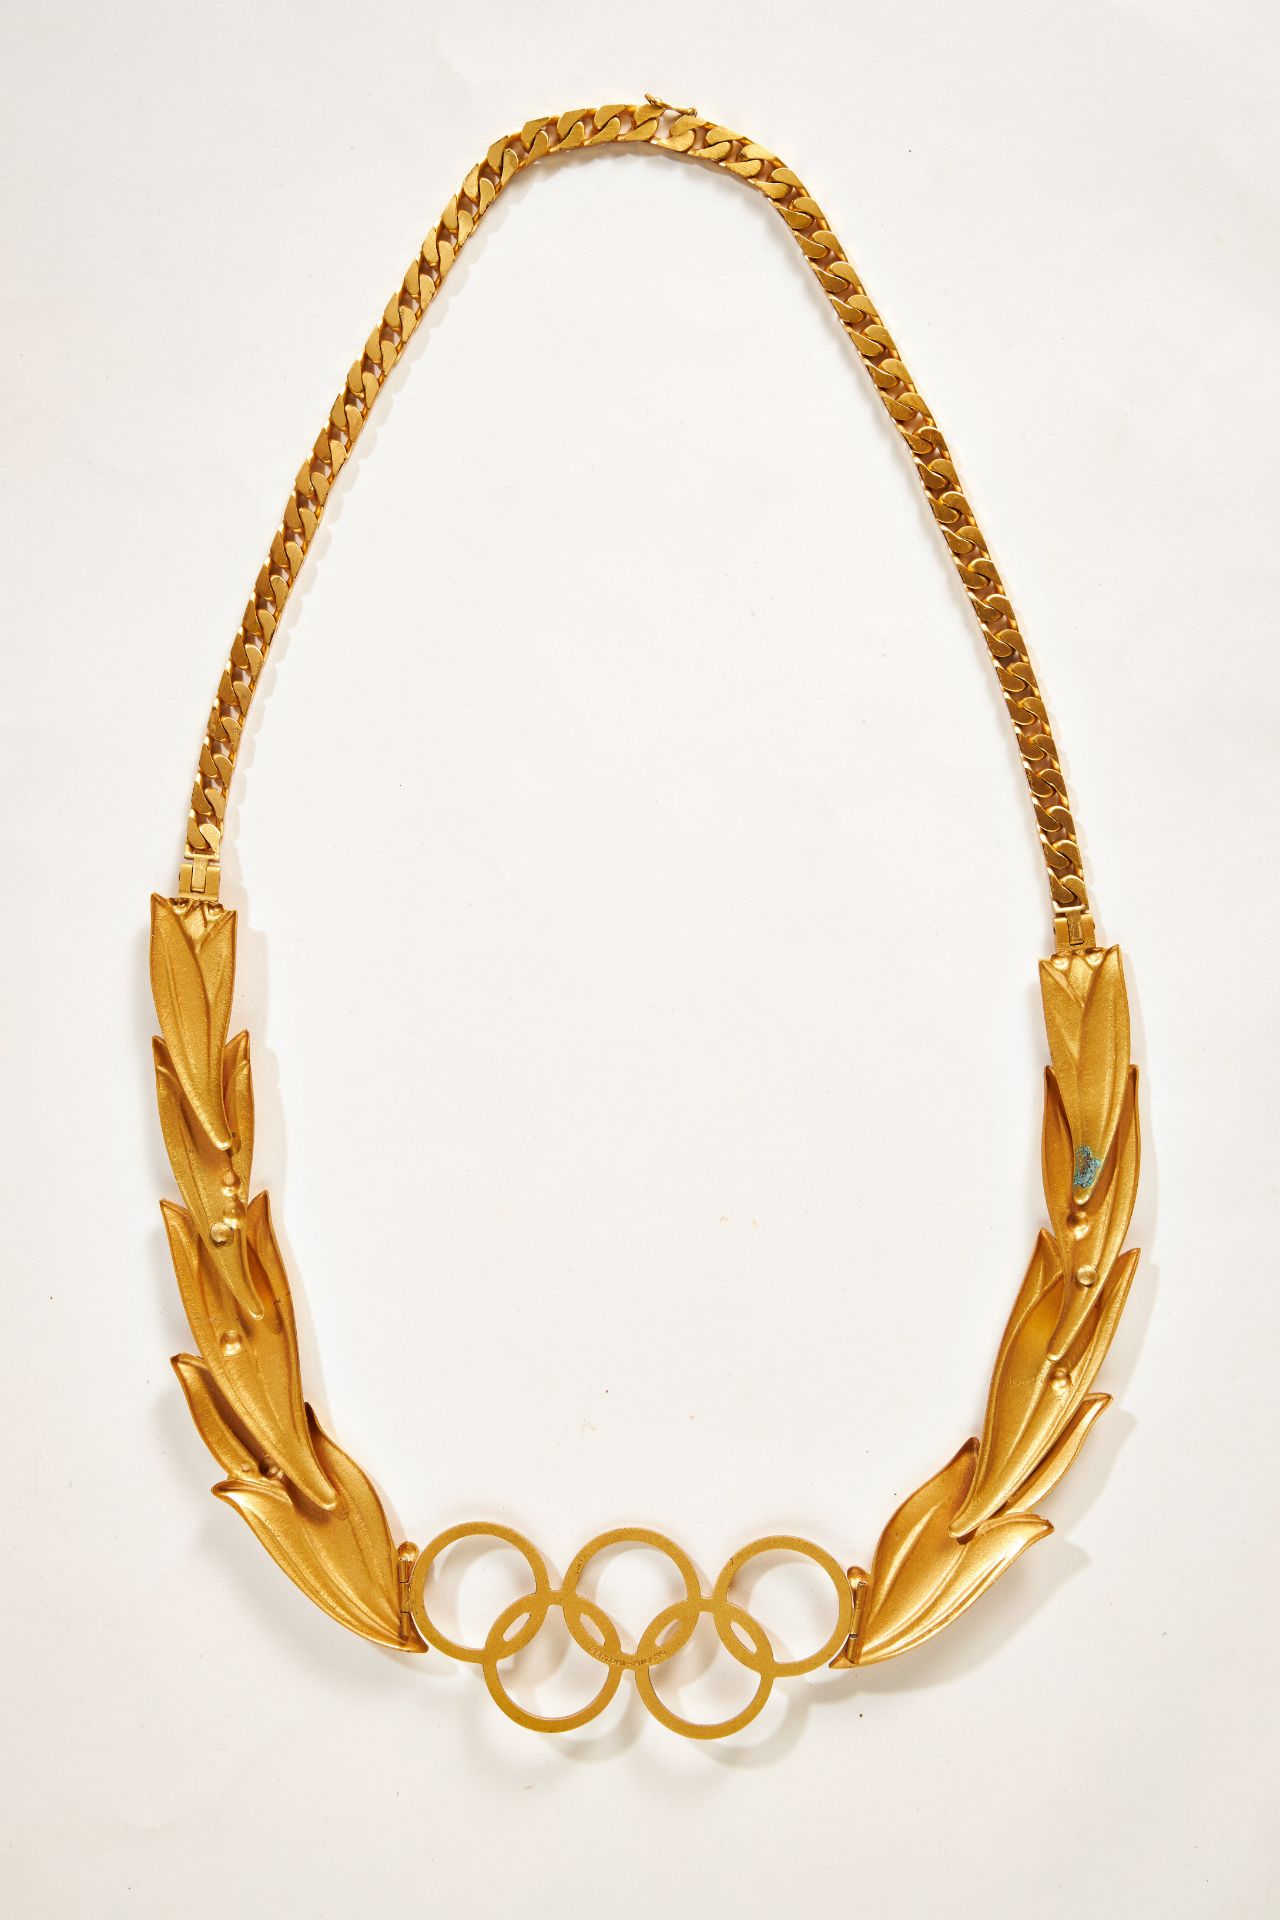 Erich Honecker - Internationales Olympisches Komitee: Olympischer Orden in Gold. Exemplar verlie... - Image 2 of 7